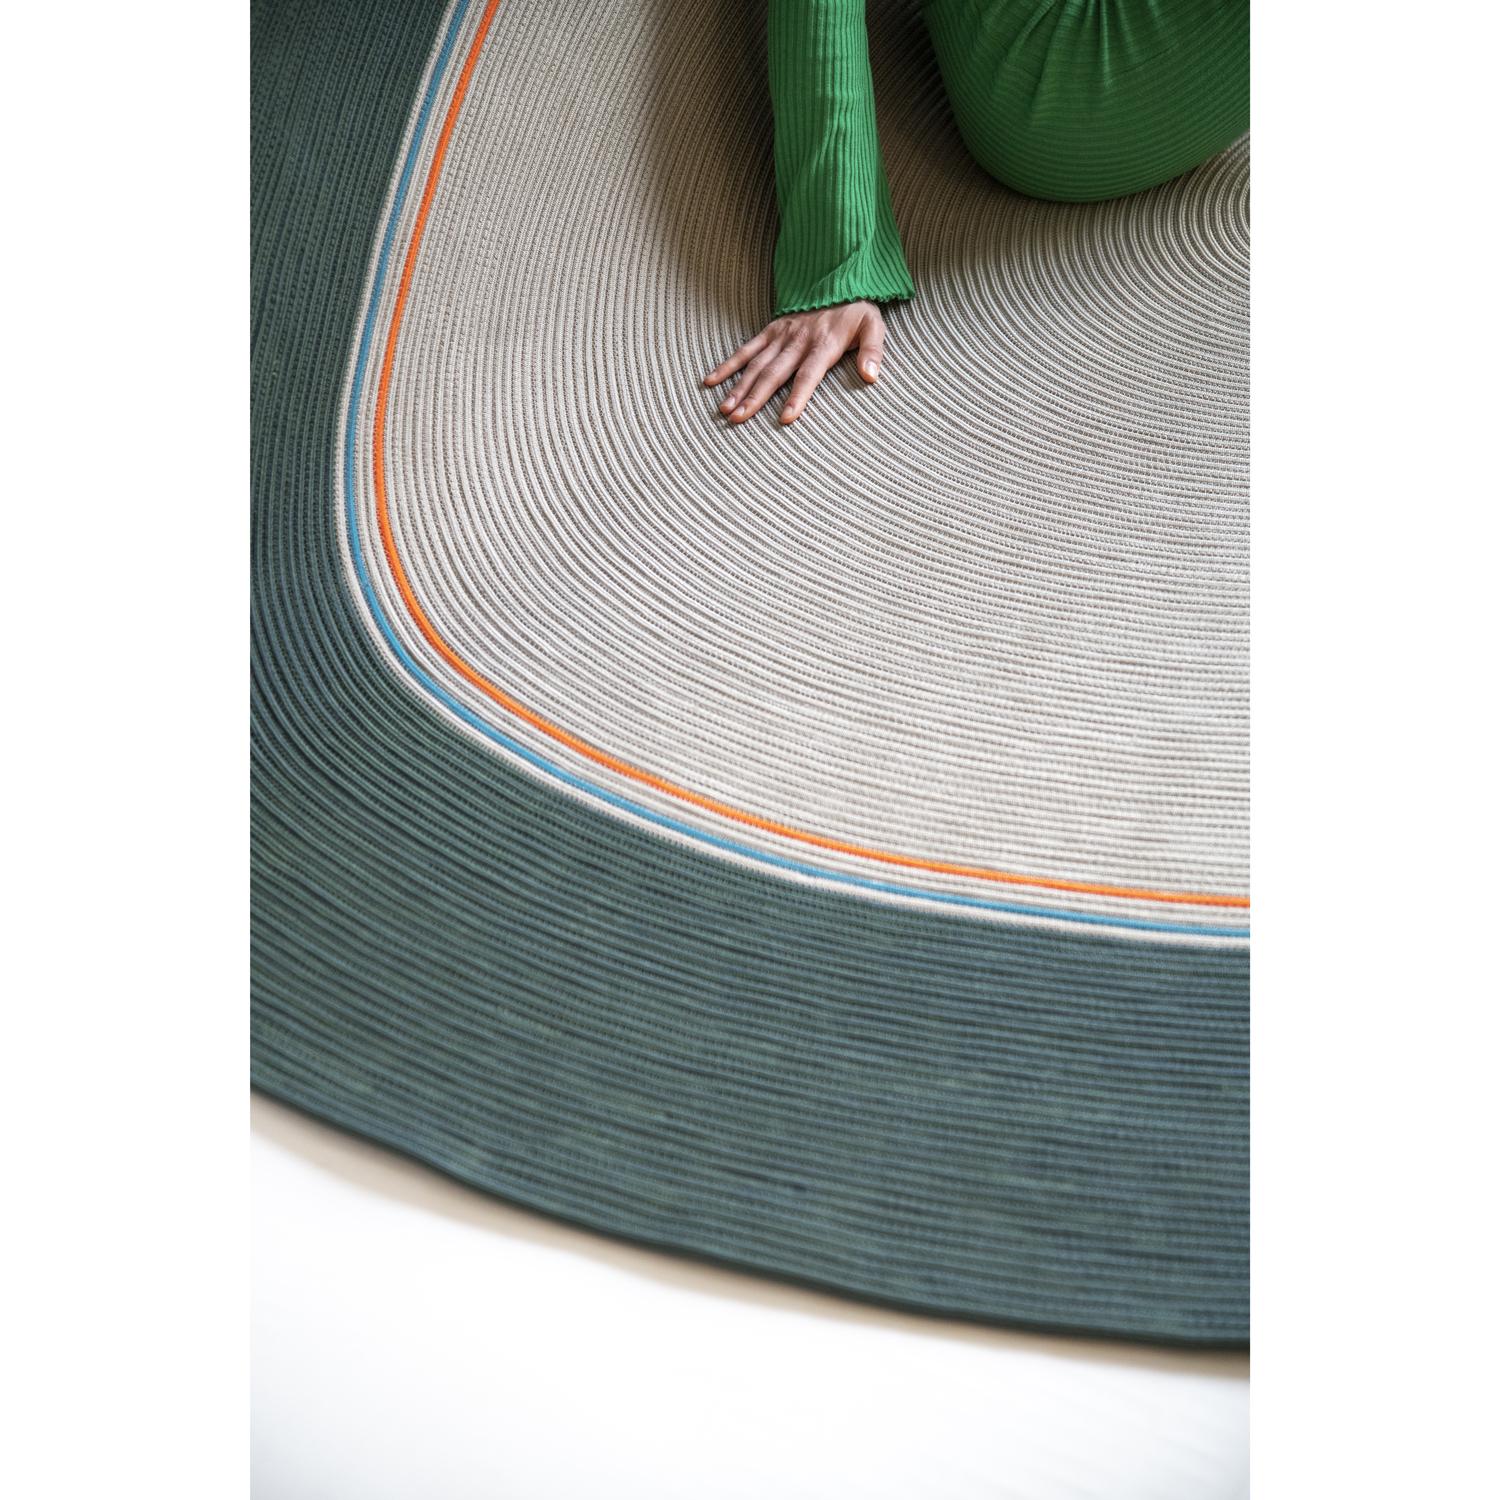 Other Tappeto Design Rotondo Indoor Outdoor Grigio Verde by Deanna Comellini Ø250 cm For Sale